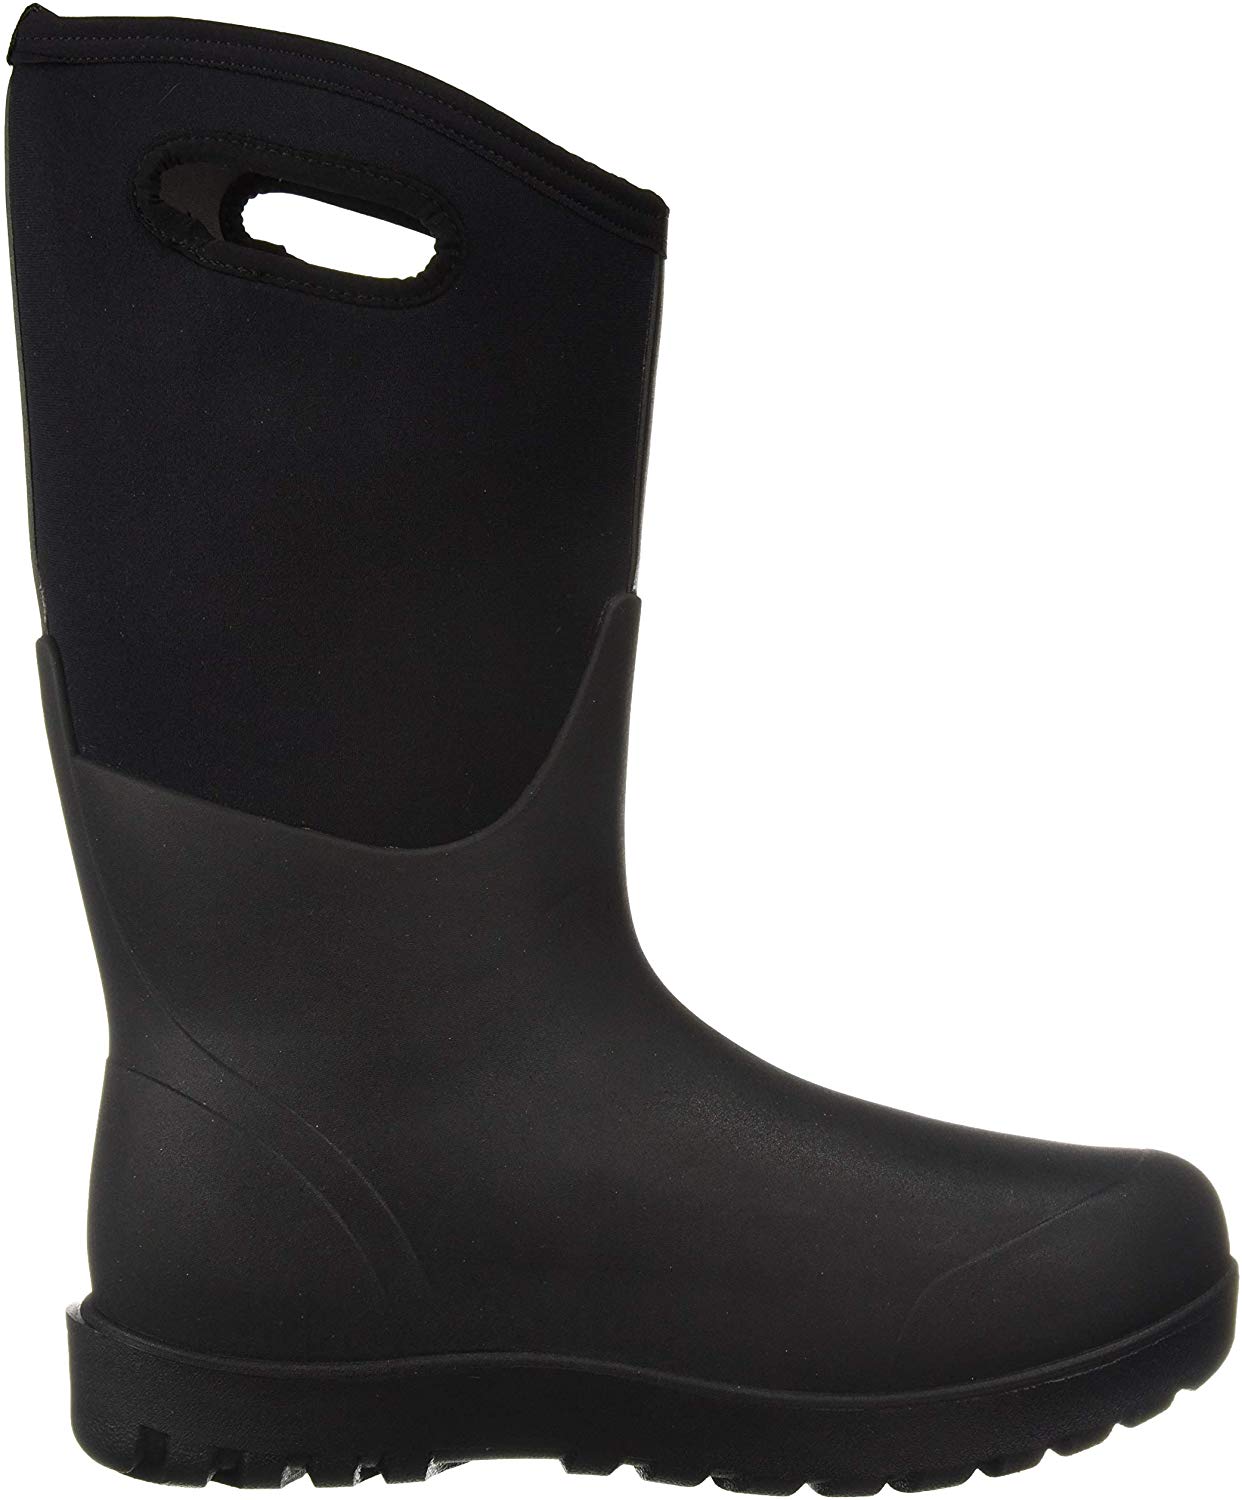 Bogs Women&#39;s Neo-Classic Snow Boot, Tall Black, Size 9.0 zyHL 603246612640 | eBay